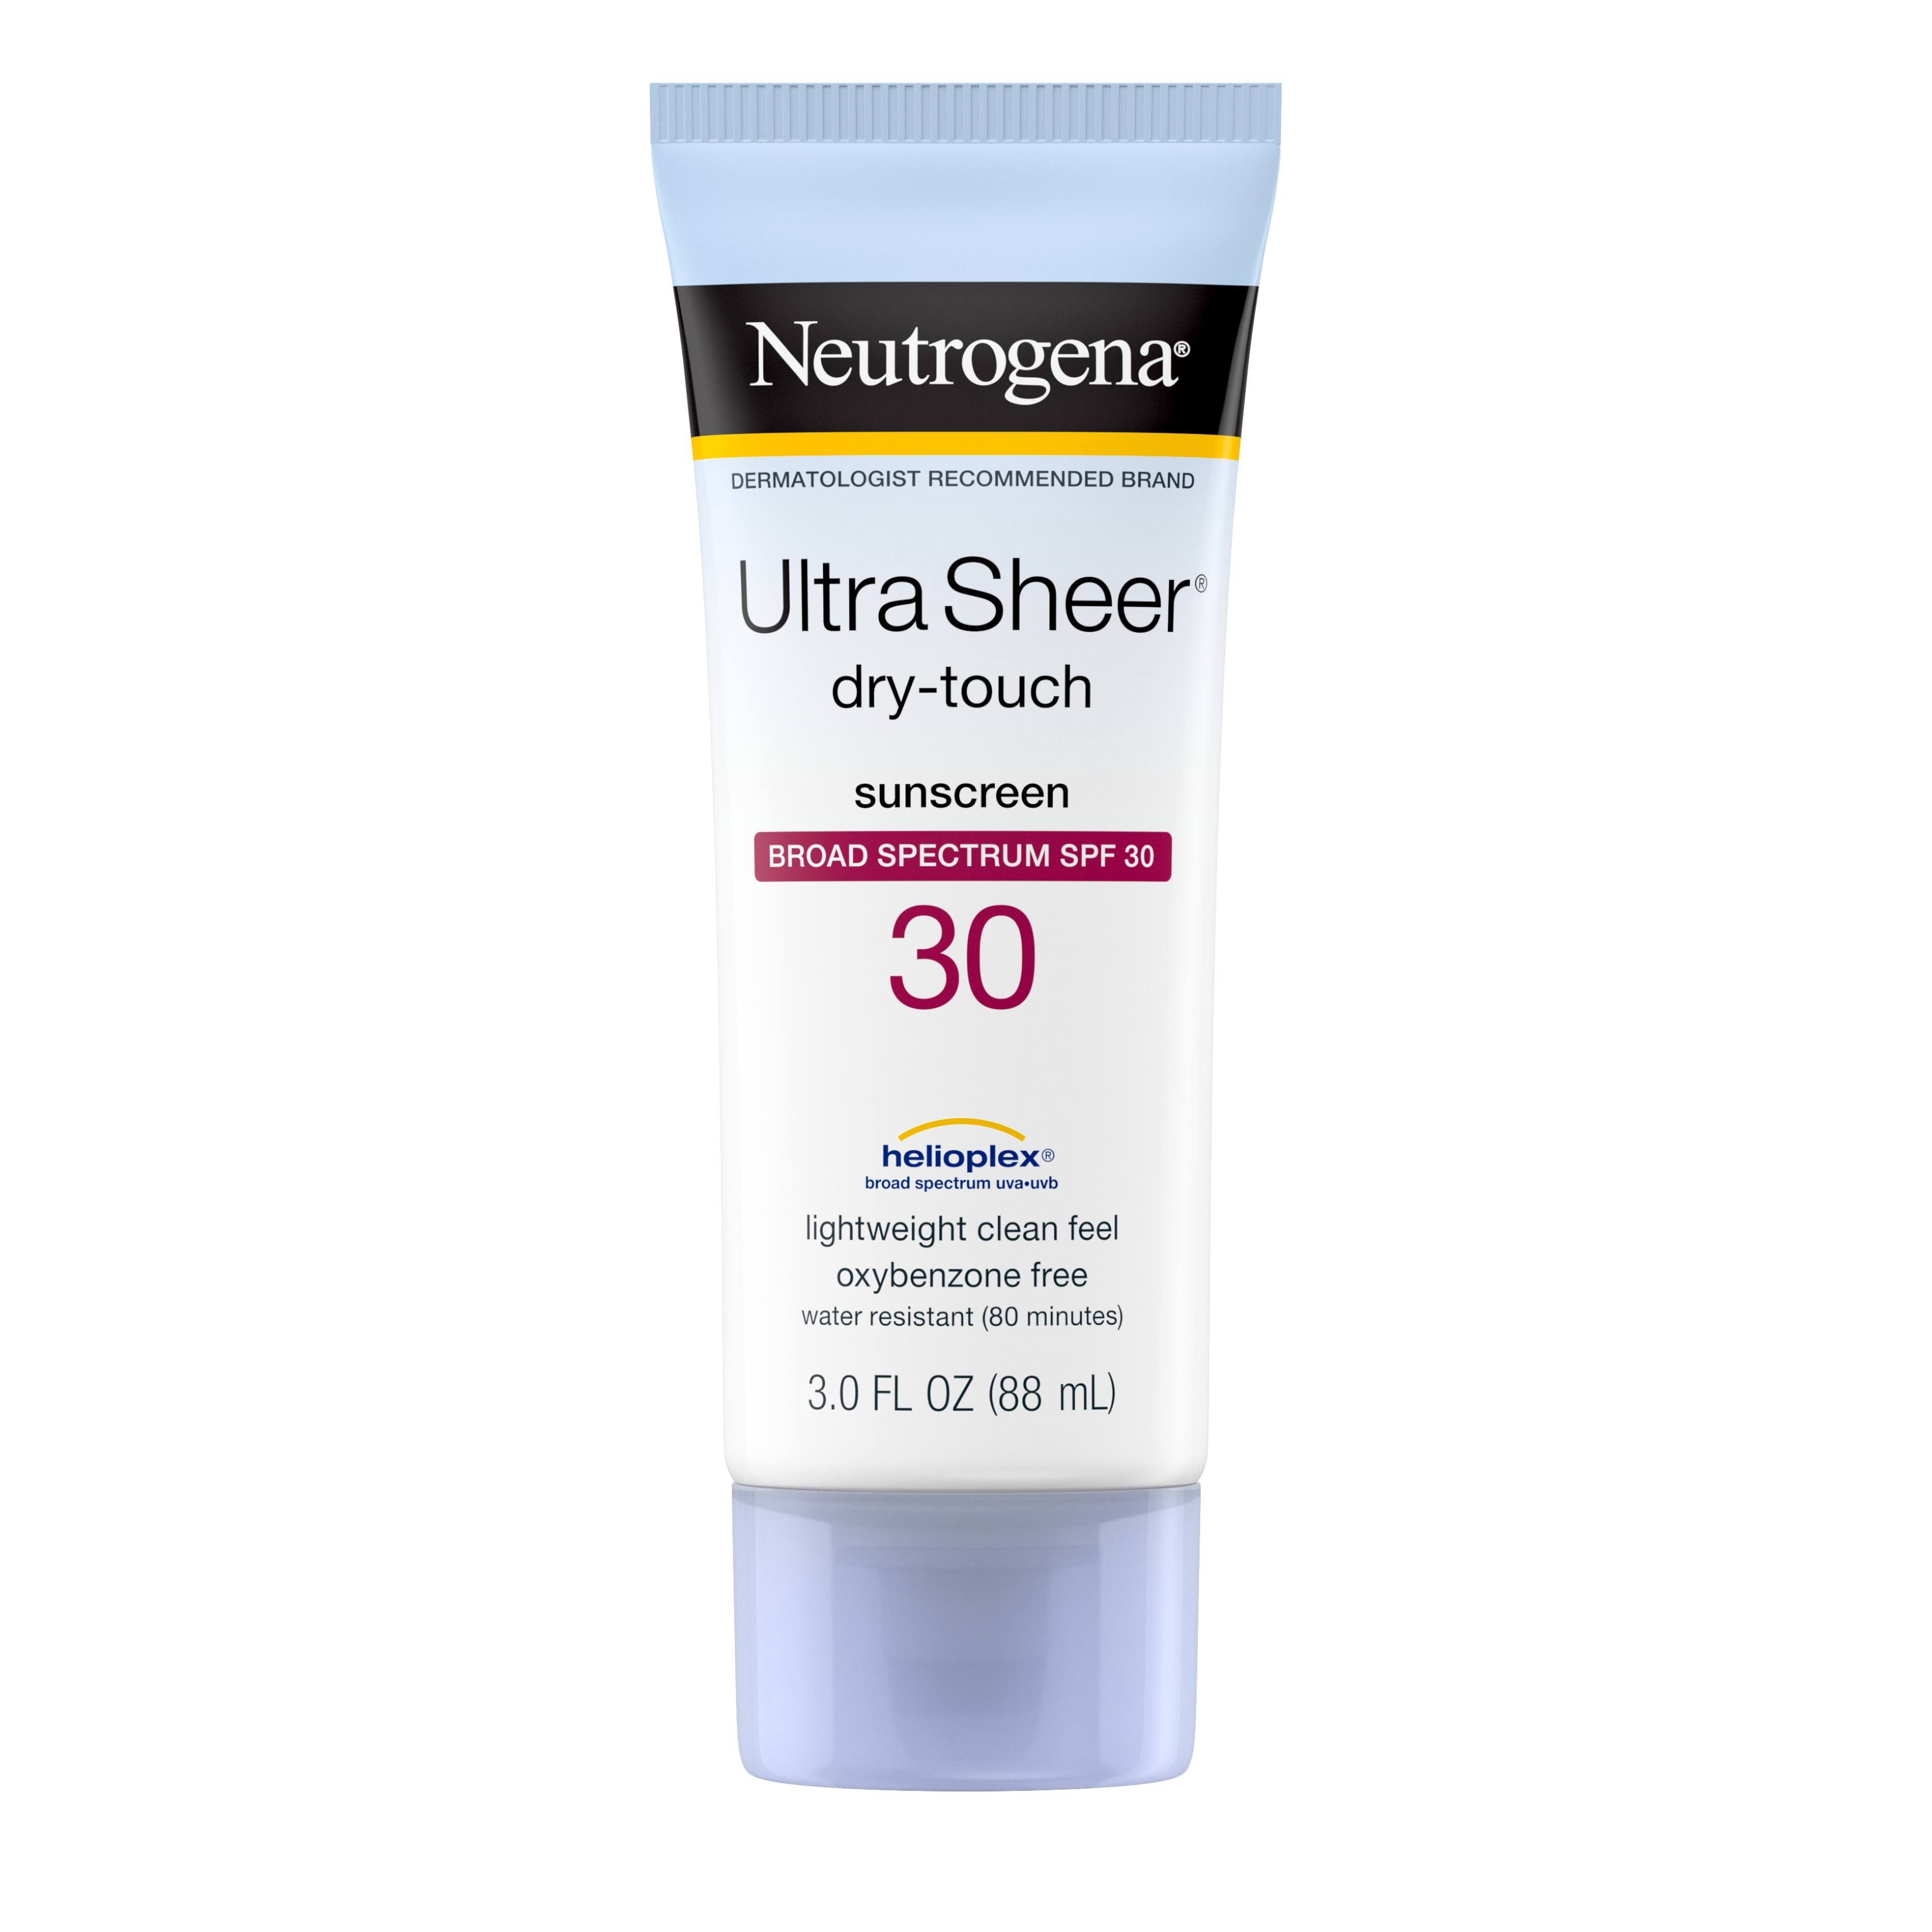 Neutrogena Ultra Sheer Dry-Touch Sunscreen - SPF 30, 3oz